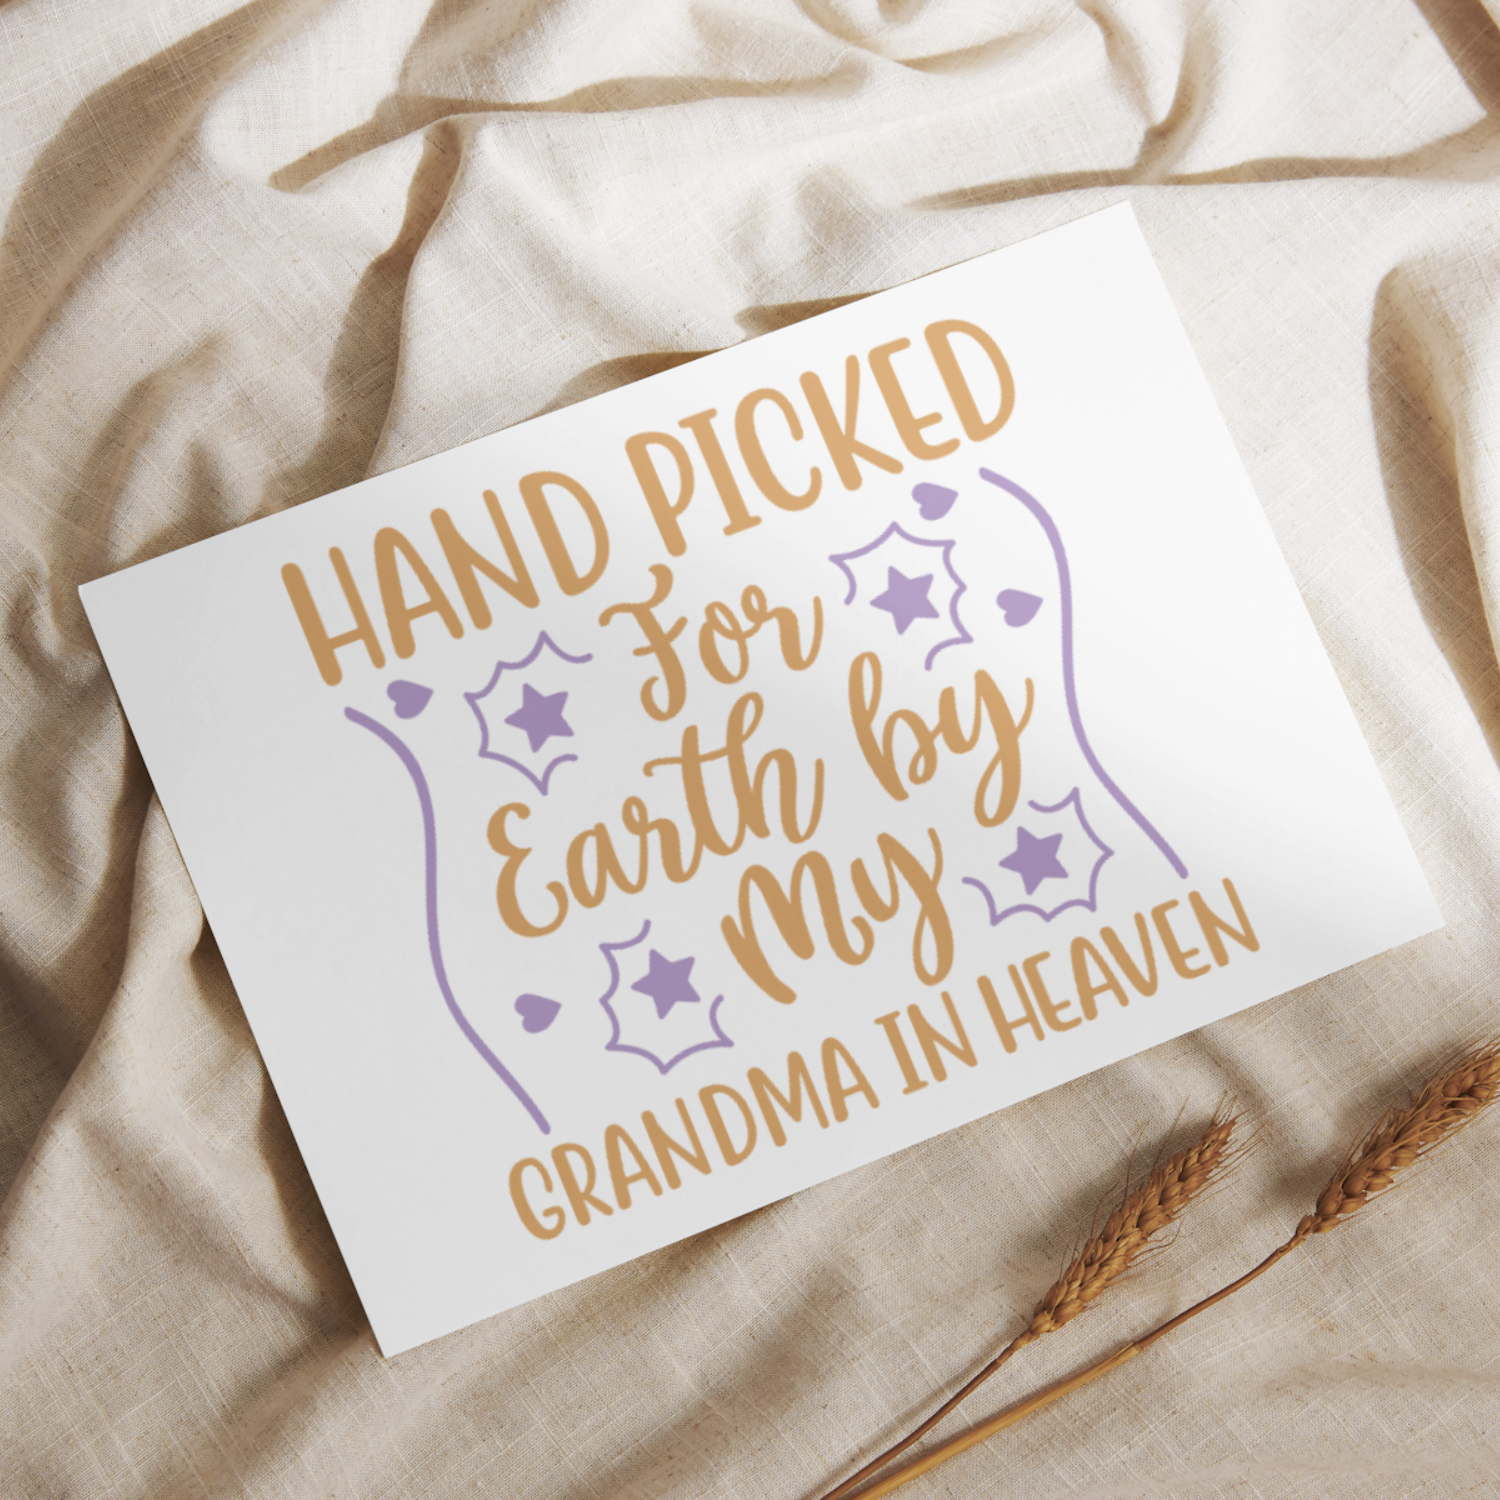 Hand picked by Grandma SVG | Digital Download | Cut File | SVG